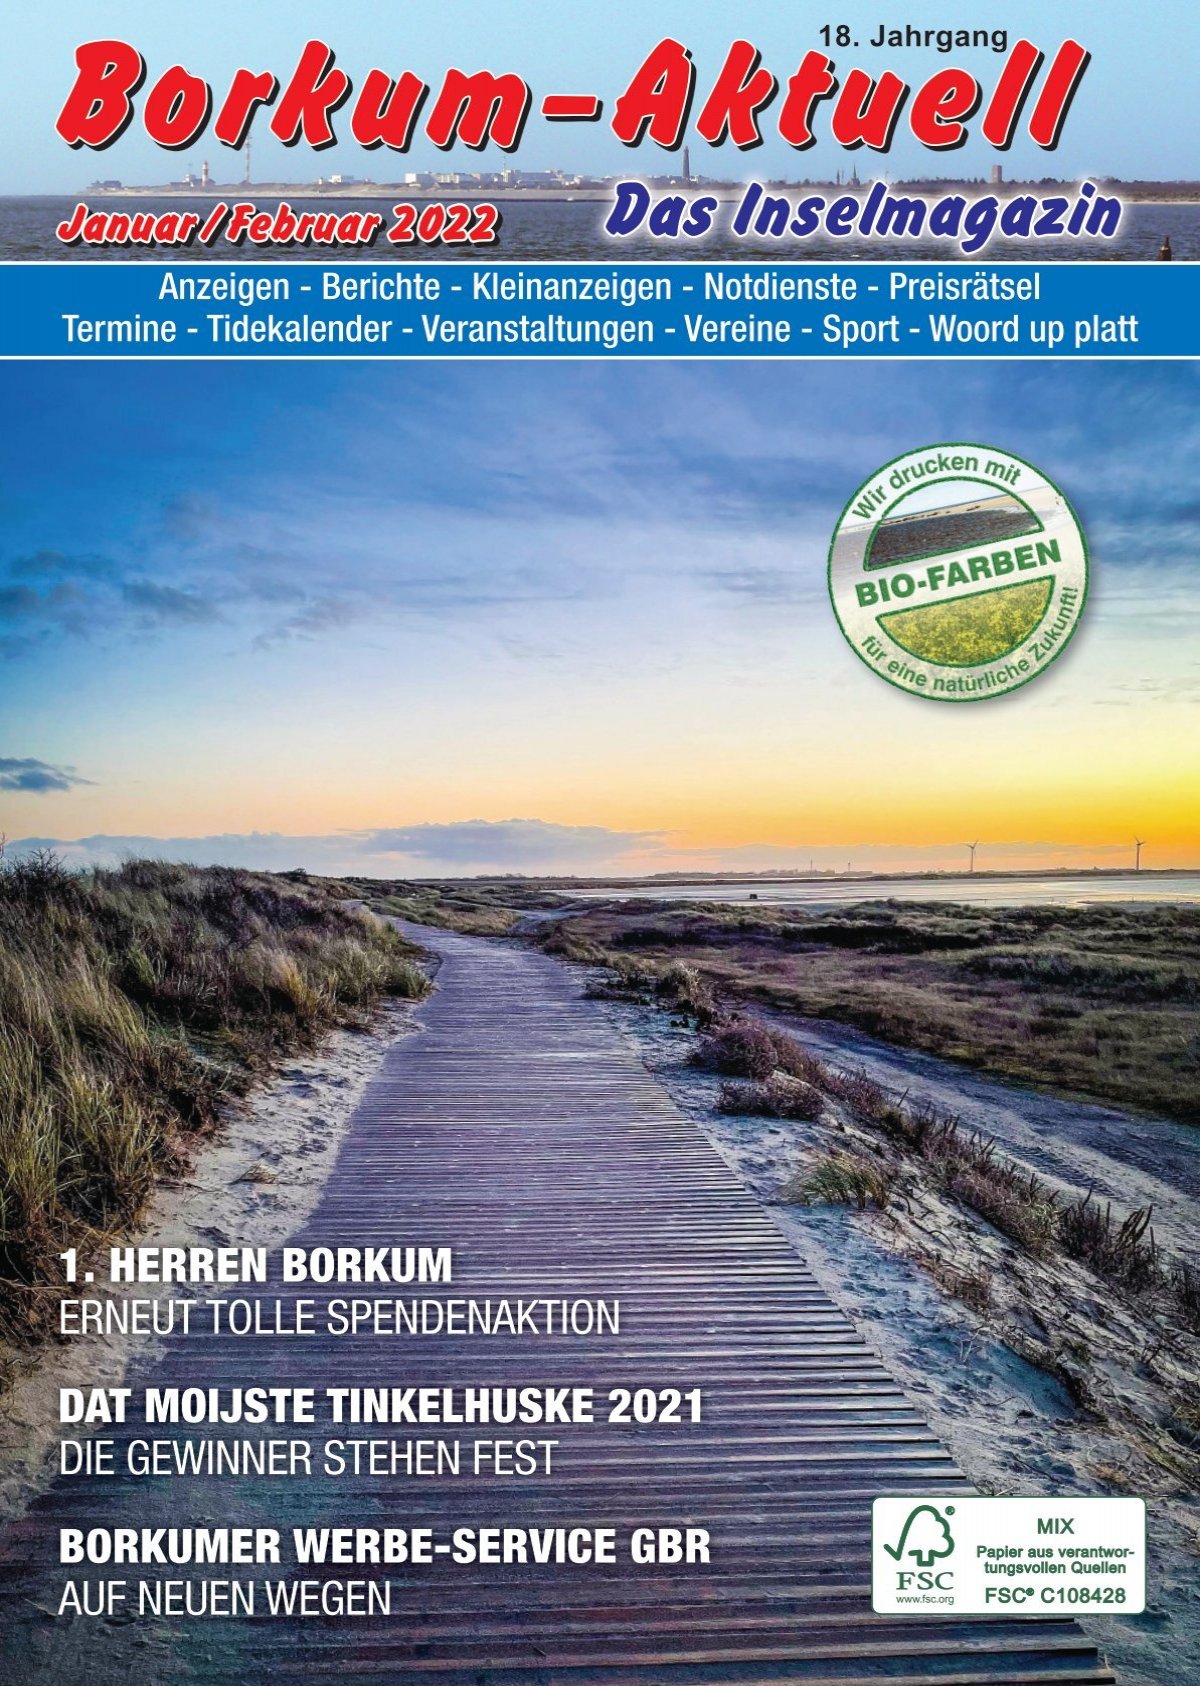 Januar/Februar 2022 Borkum-Aktuell - Das Inselmagazin